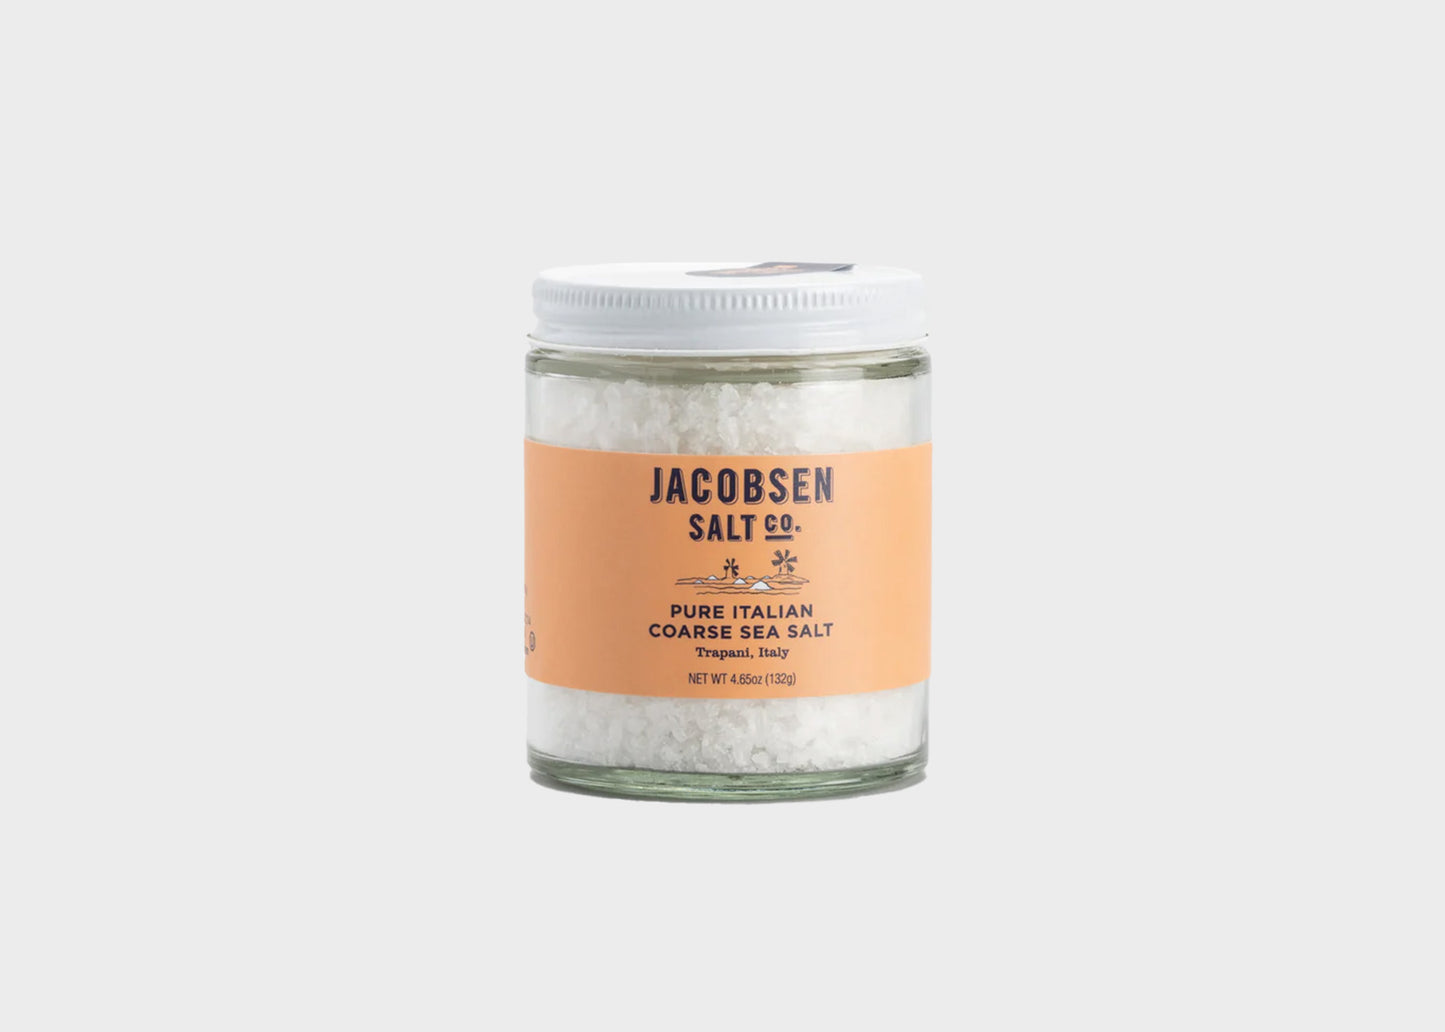 Pure Italian Course Sea Salt by Jacobsen